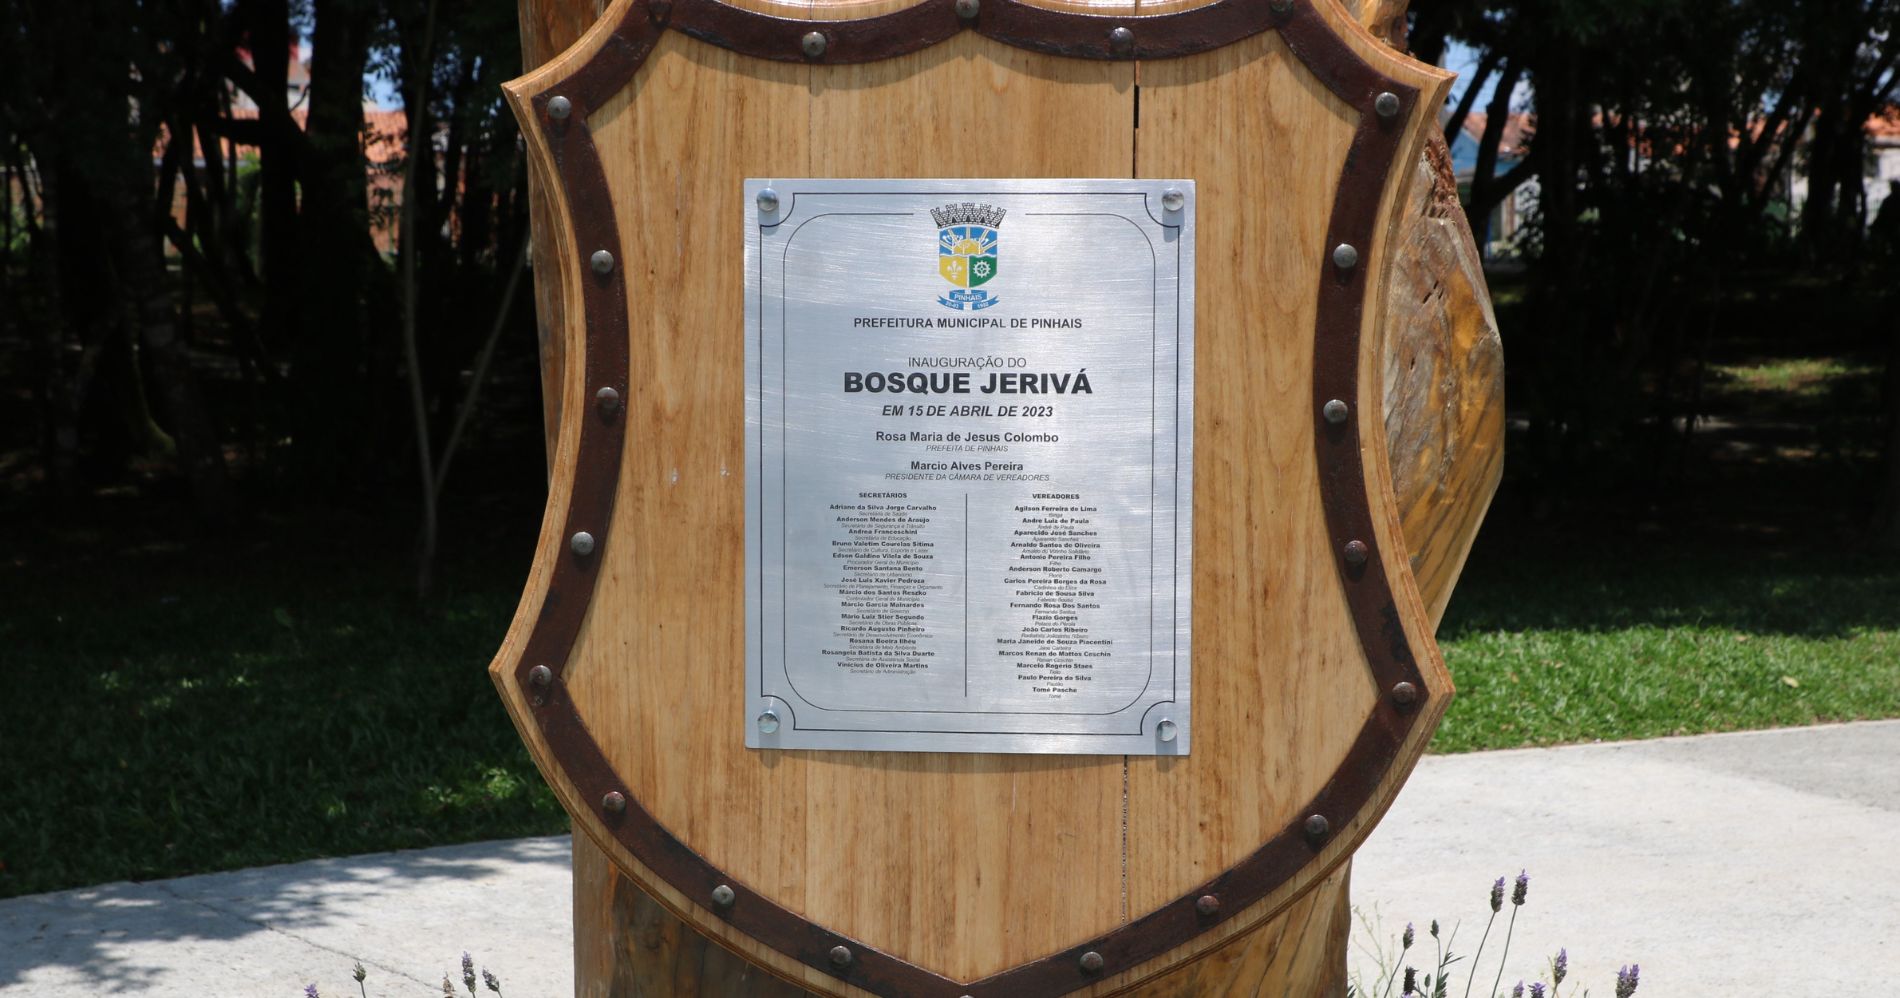 Bosque Jerivá é oficialmente denominado Pastor José Pires